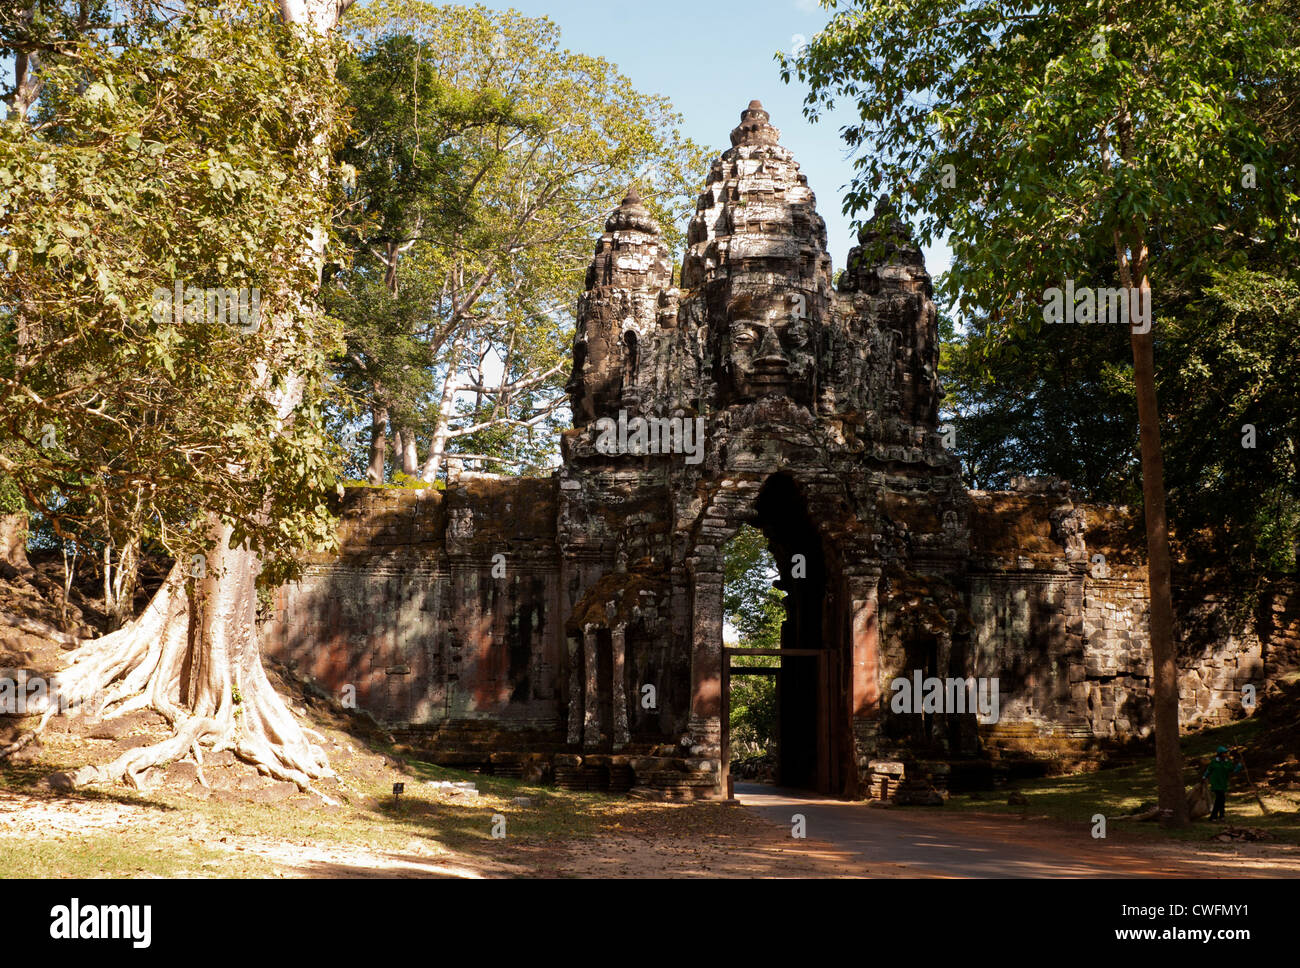 Early morning, south side of Angkor Thom North Gate, Angkor, Cambodia Stock Photo